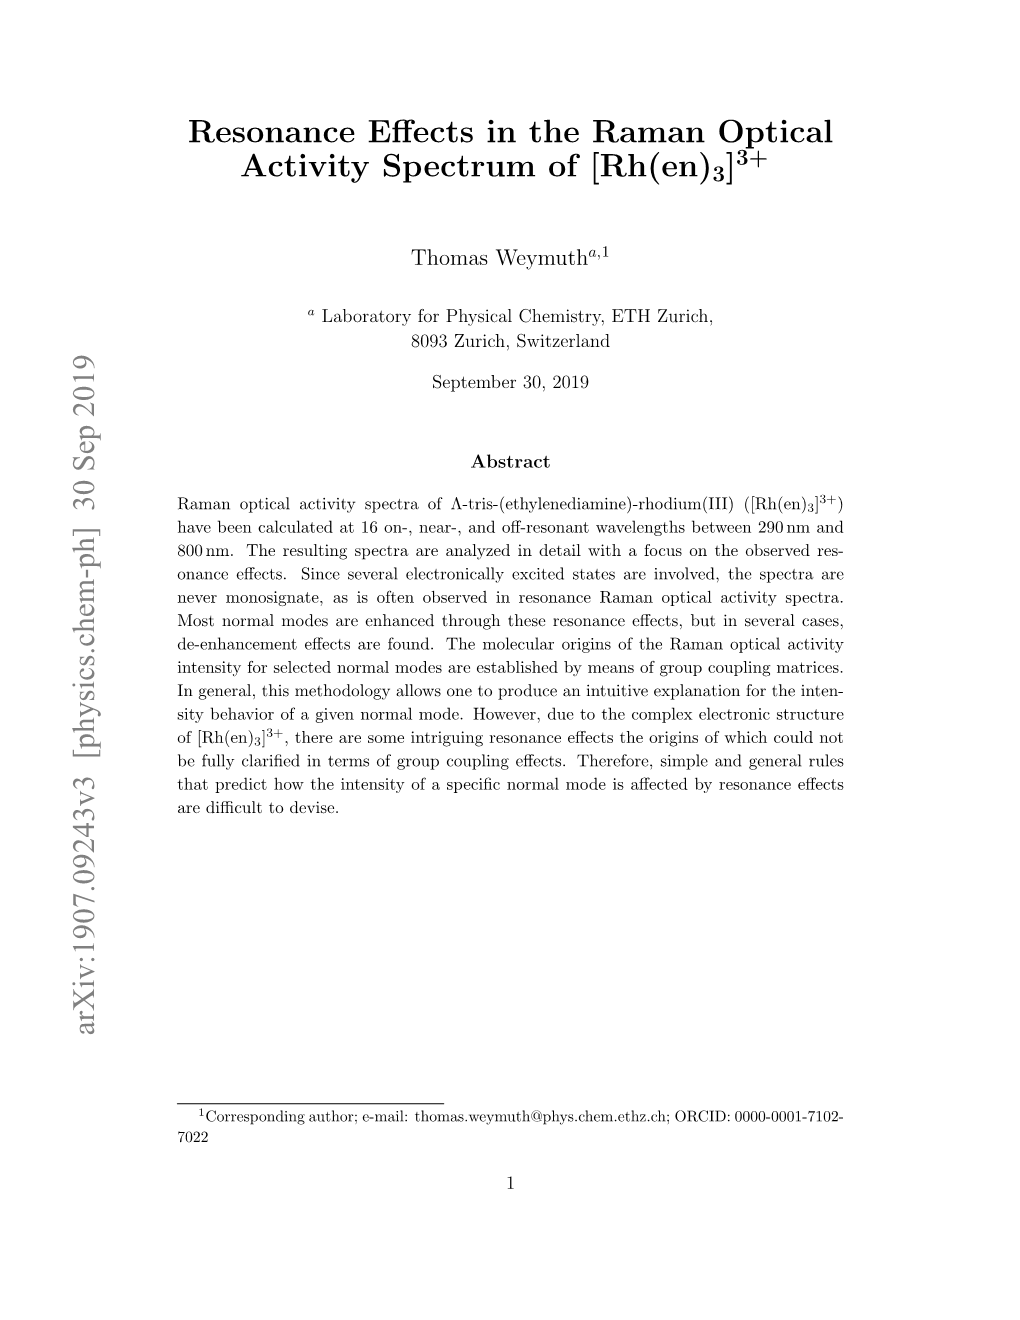 Resonance Effects in the Raman Optical Activity Spectrum of [Rh(En)3]